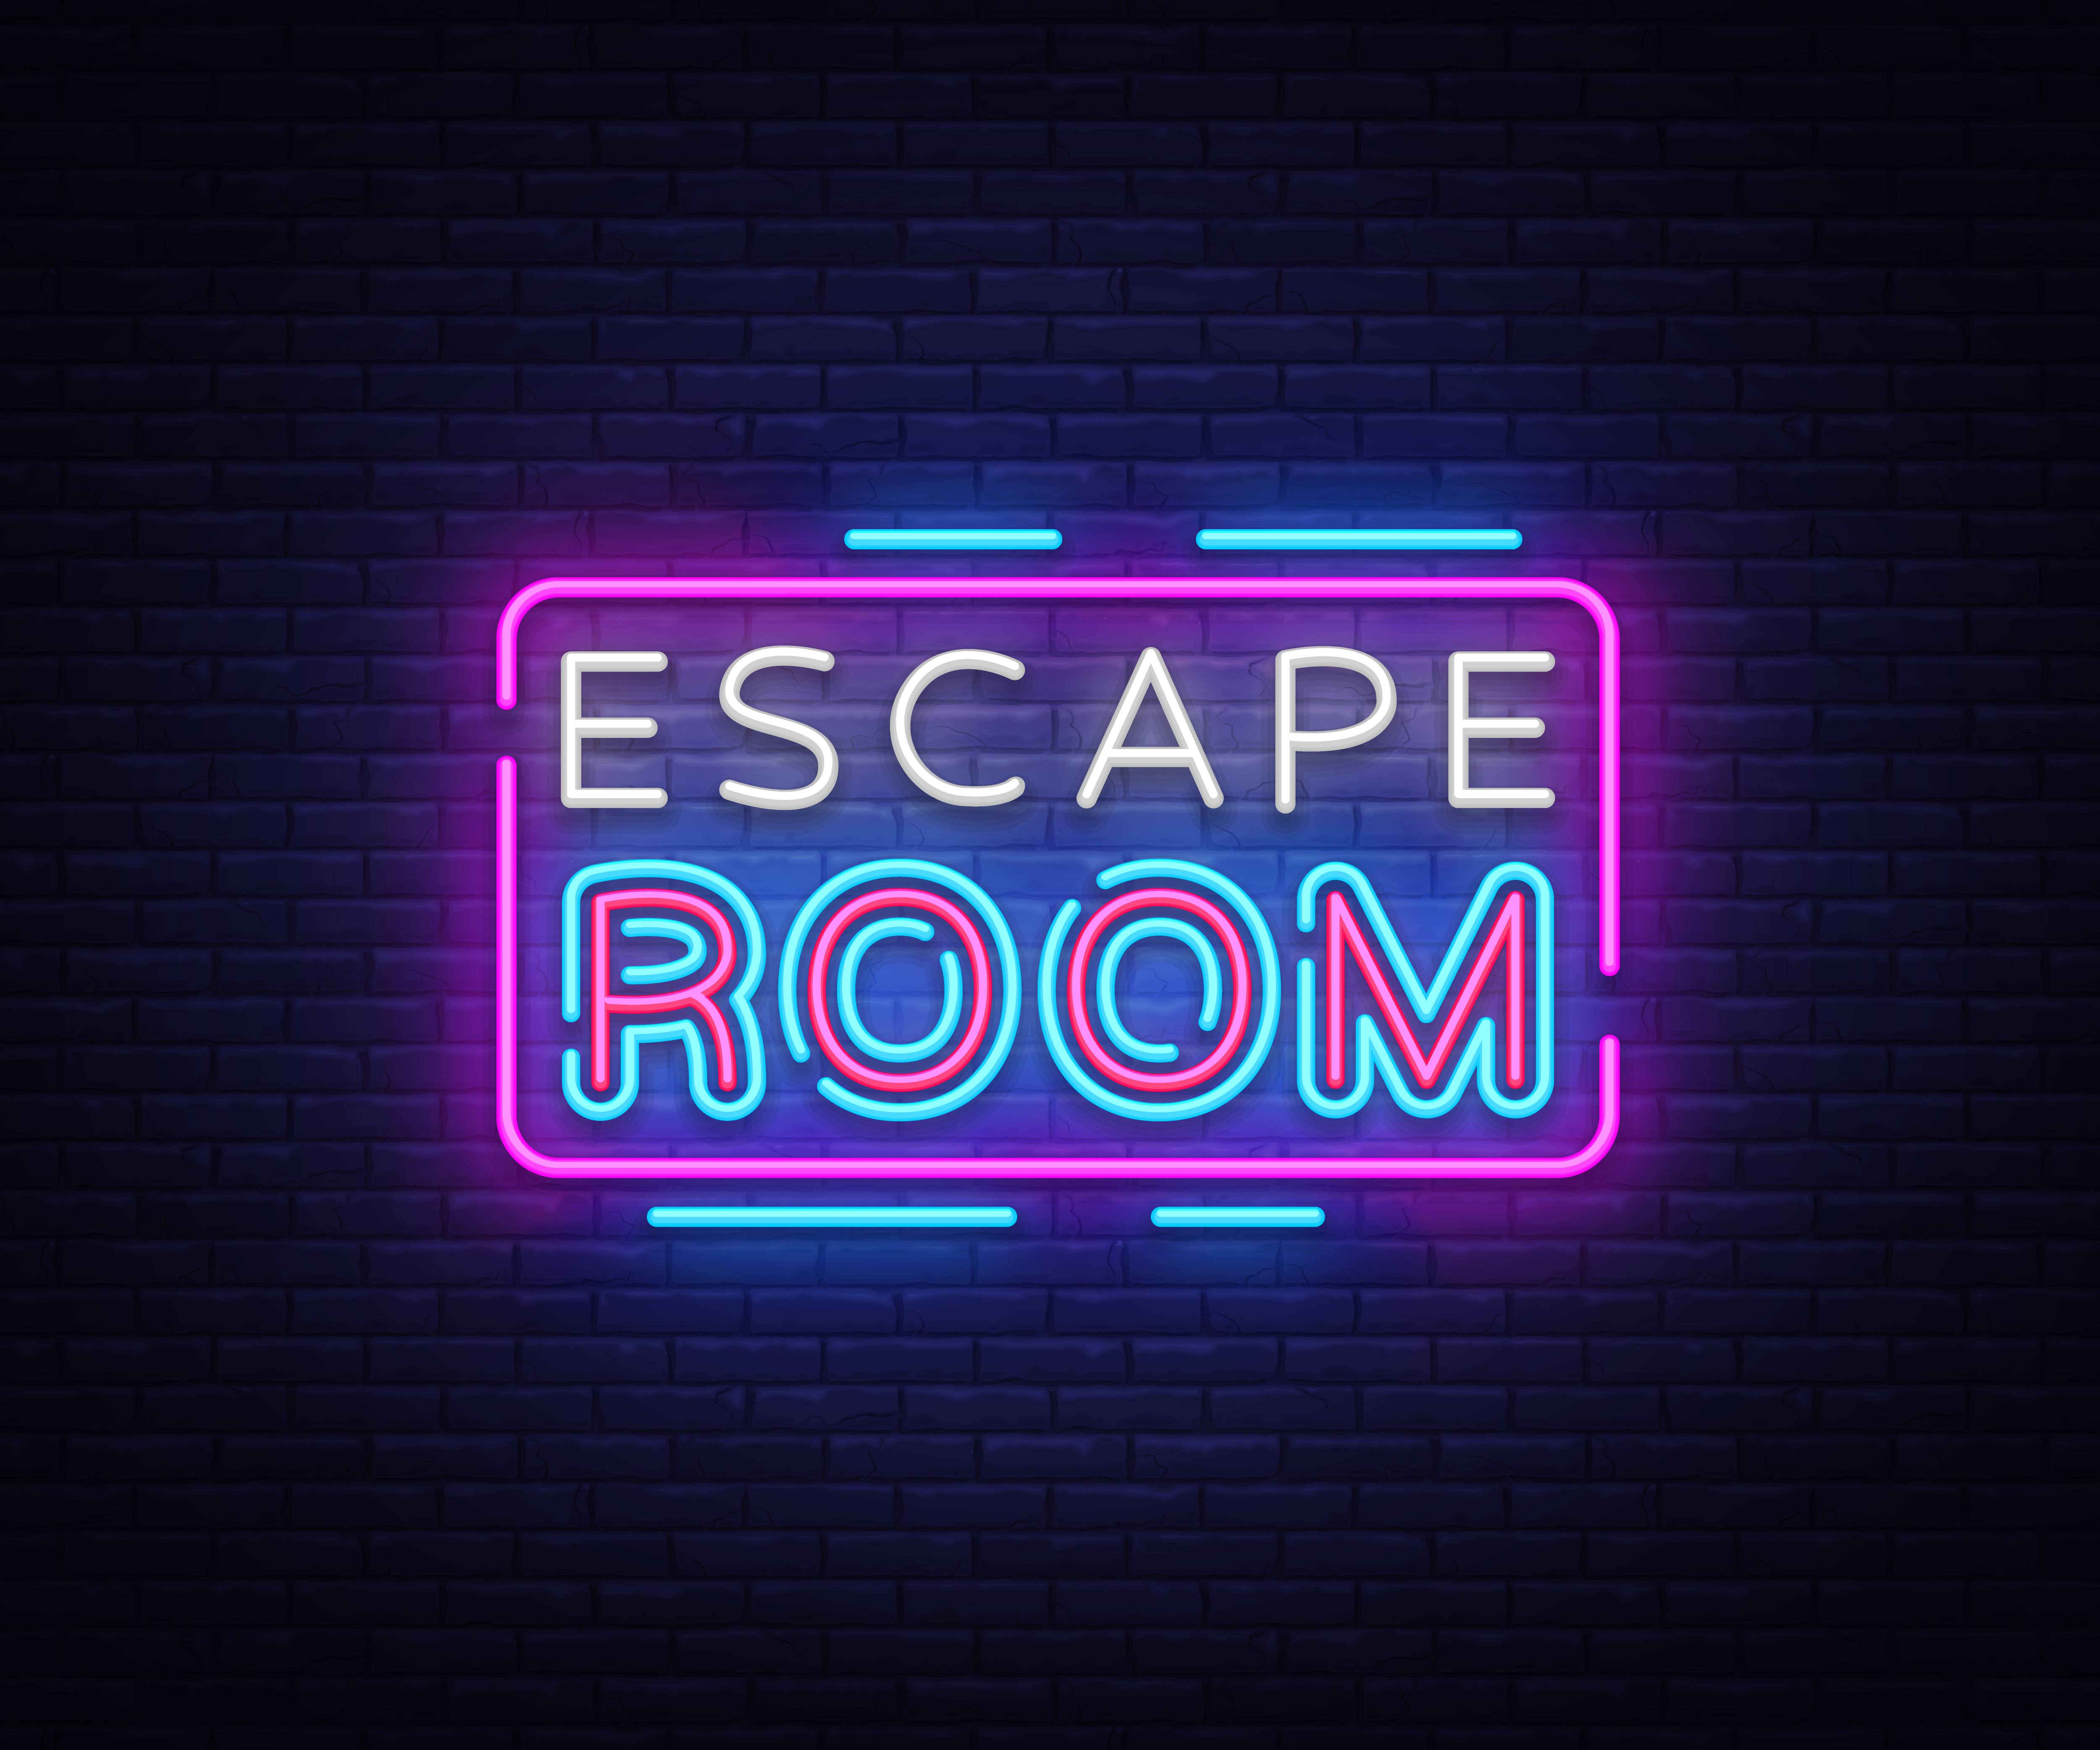 Escape! - Online Escape Room Game